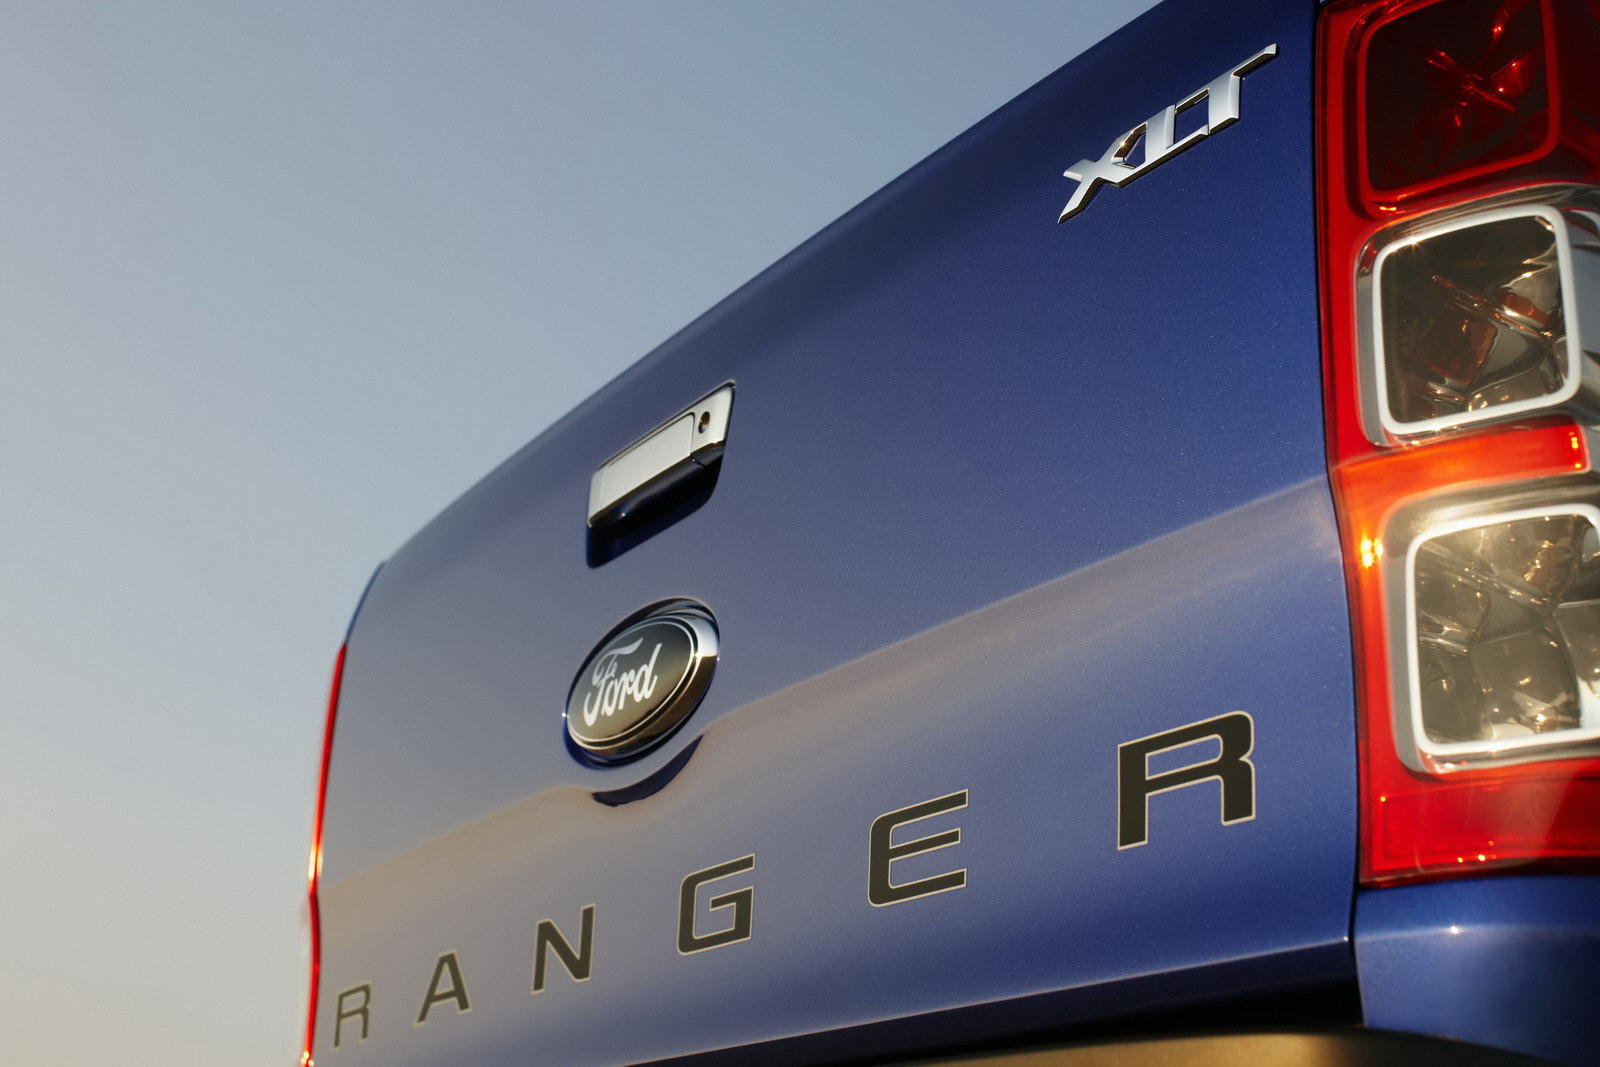 Noul Ford Ranger va ajunge in Europa in cursul anului 2012